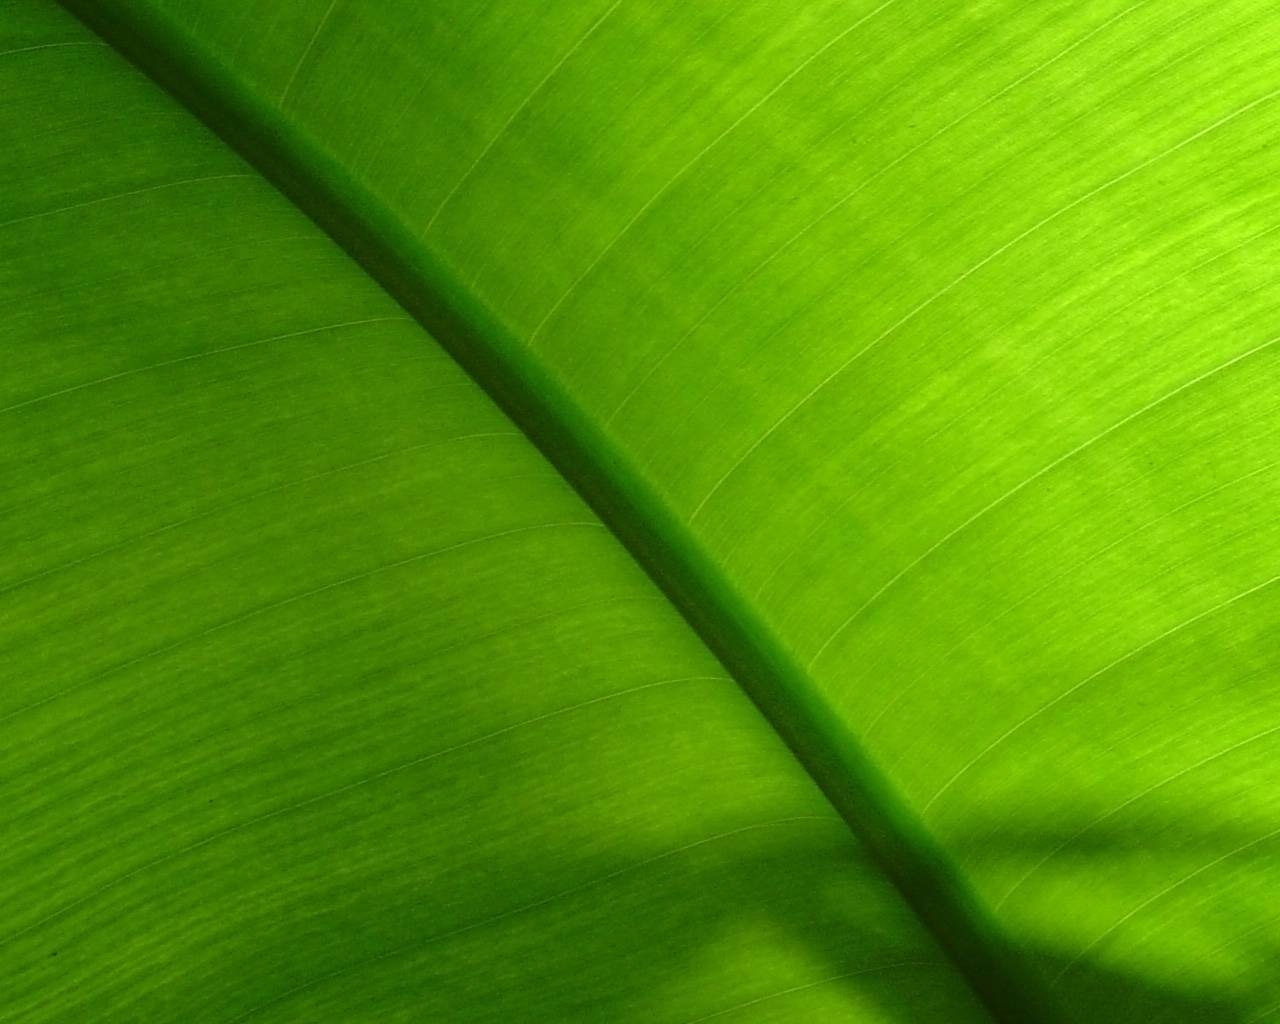 wallpaper hijau,green,leaf,banana leaf,close up,line